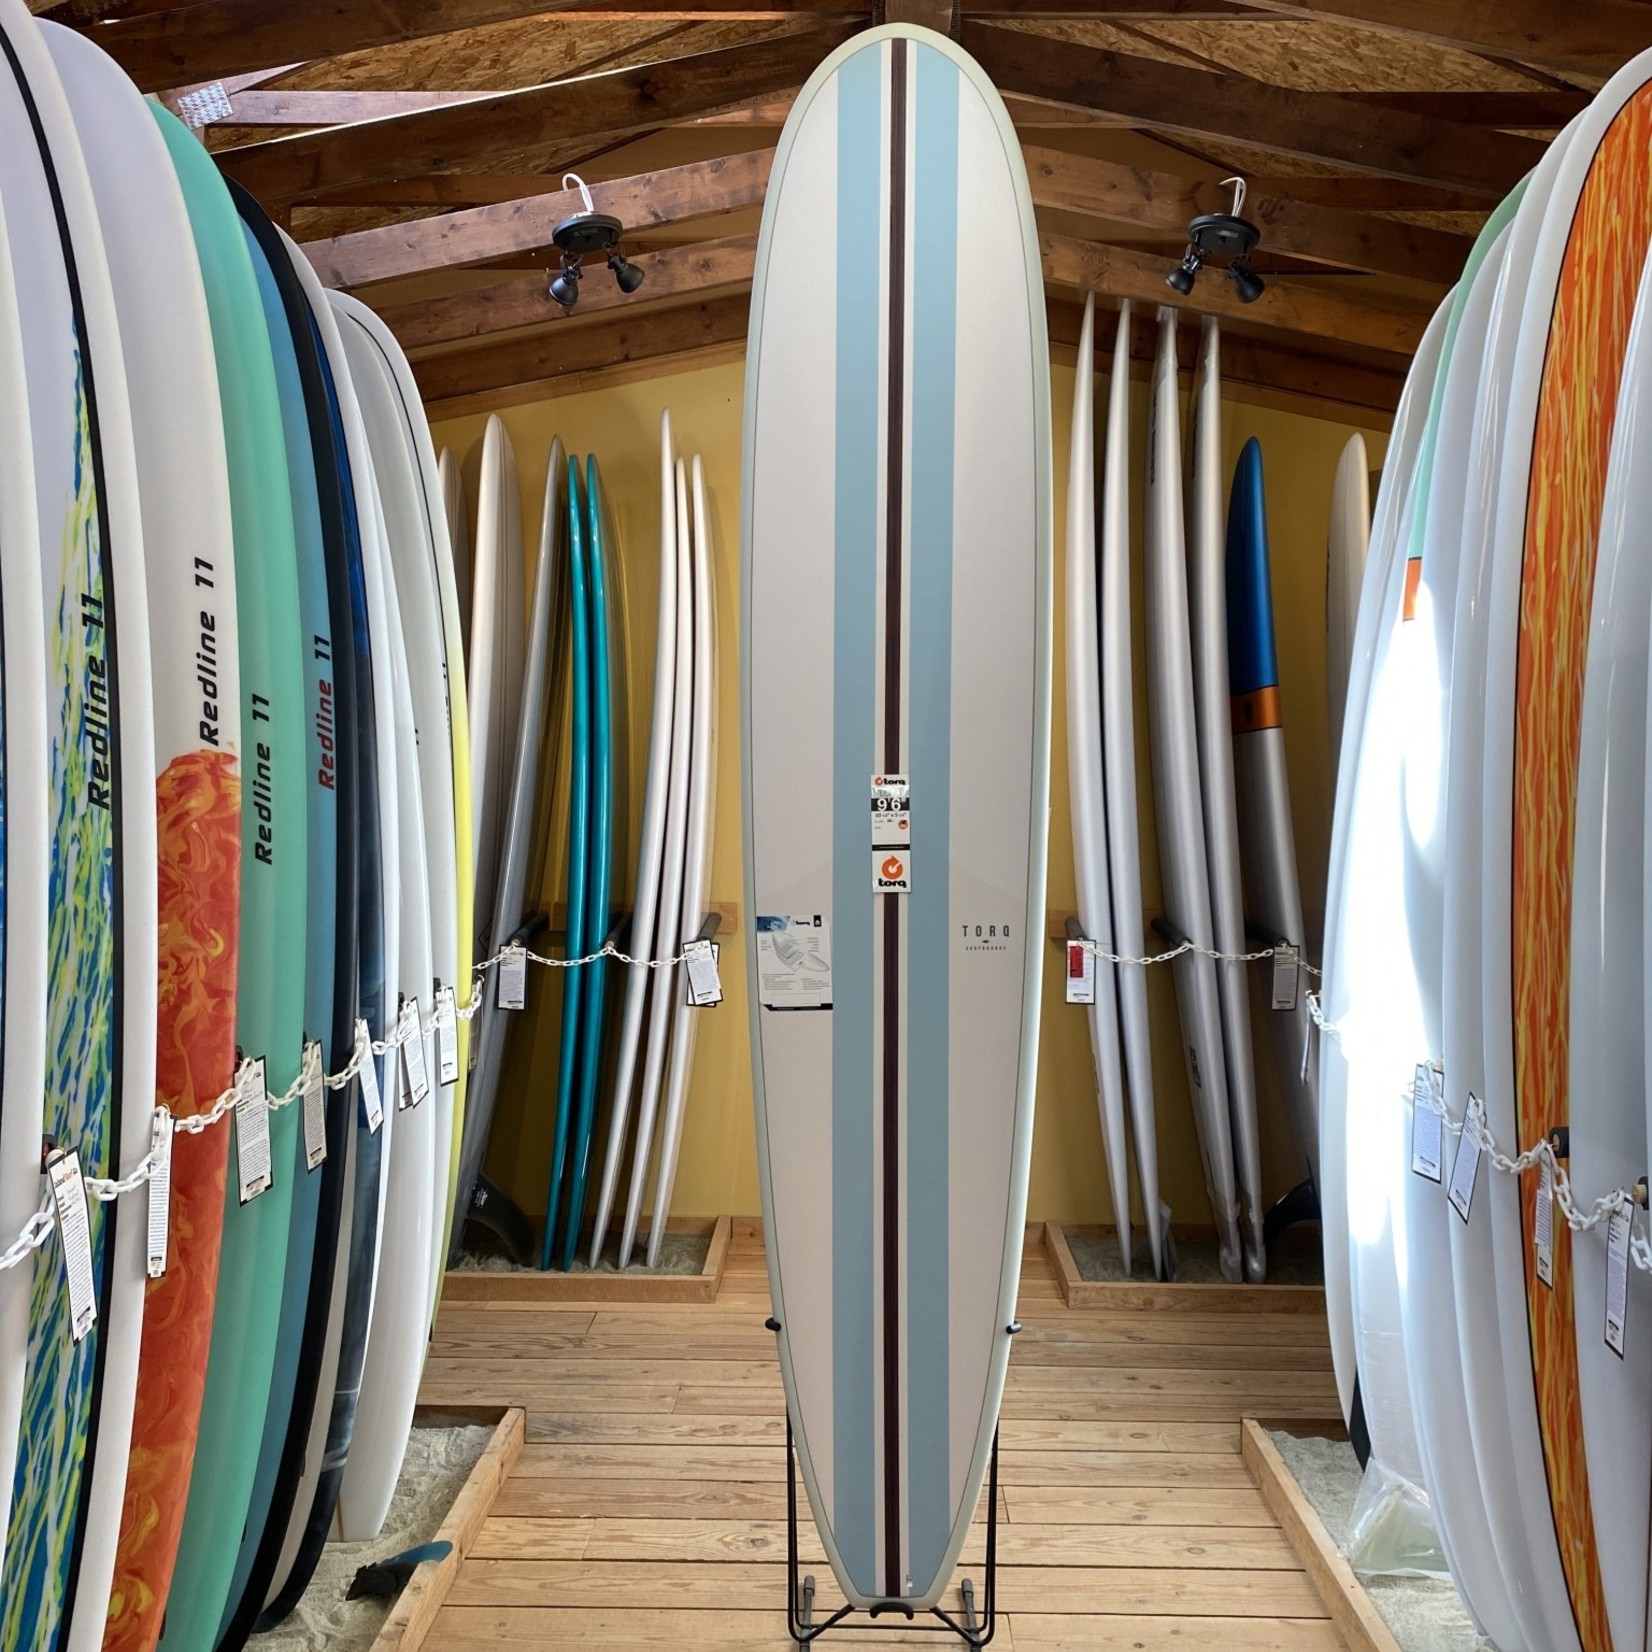 TORQ Surfboards 9'6 Torq Longboards Long Lines